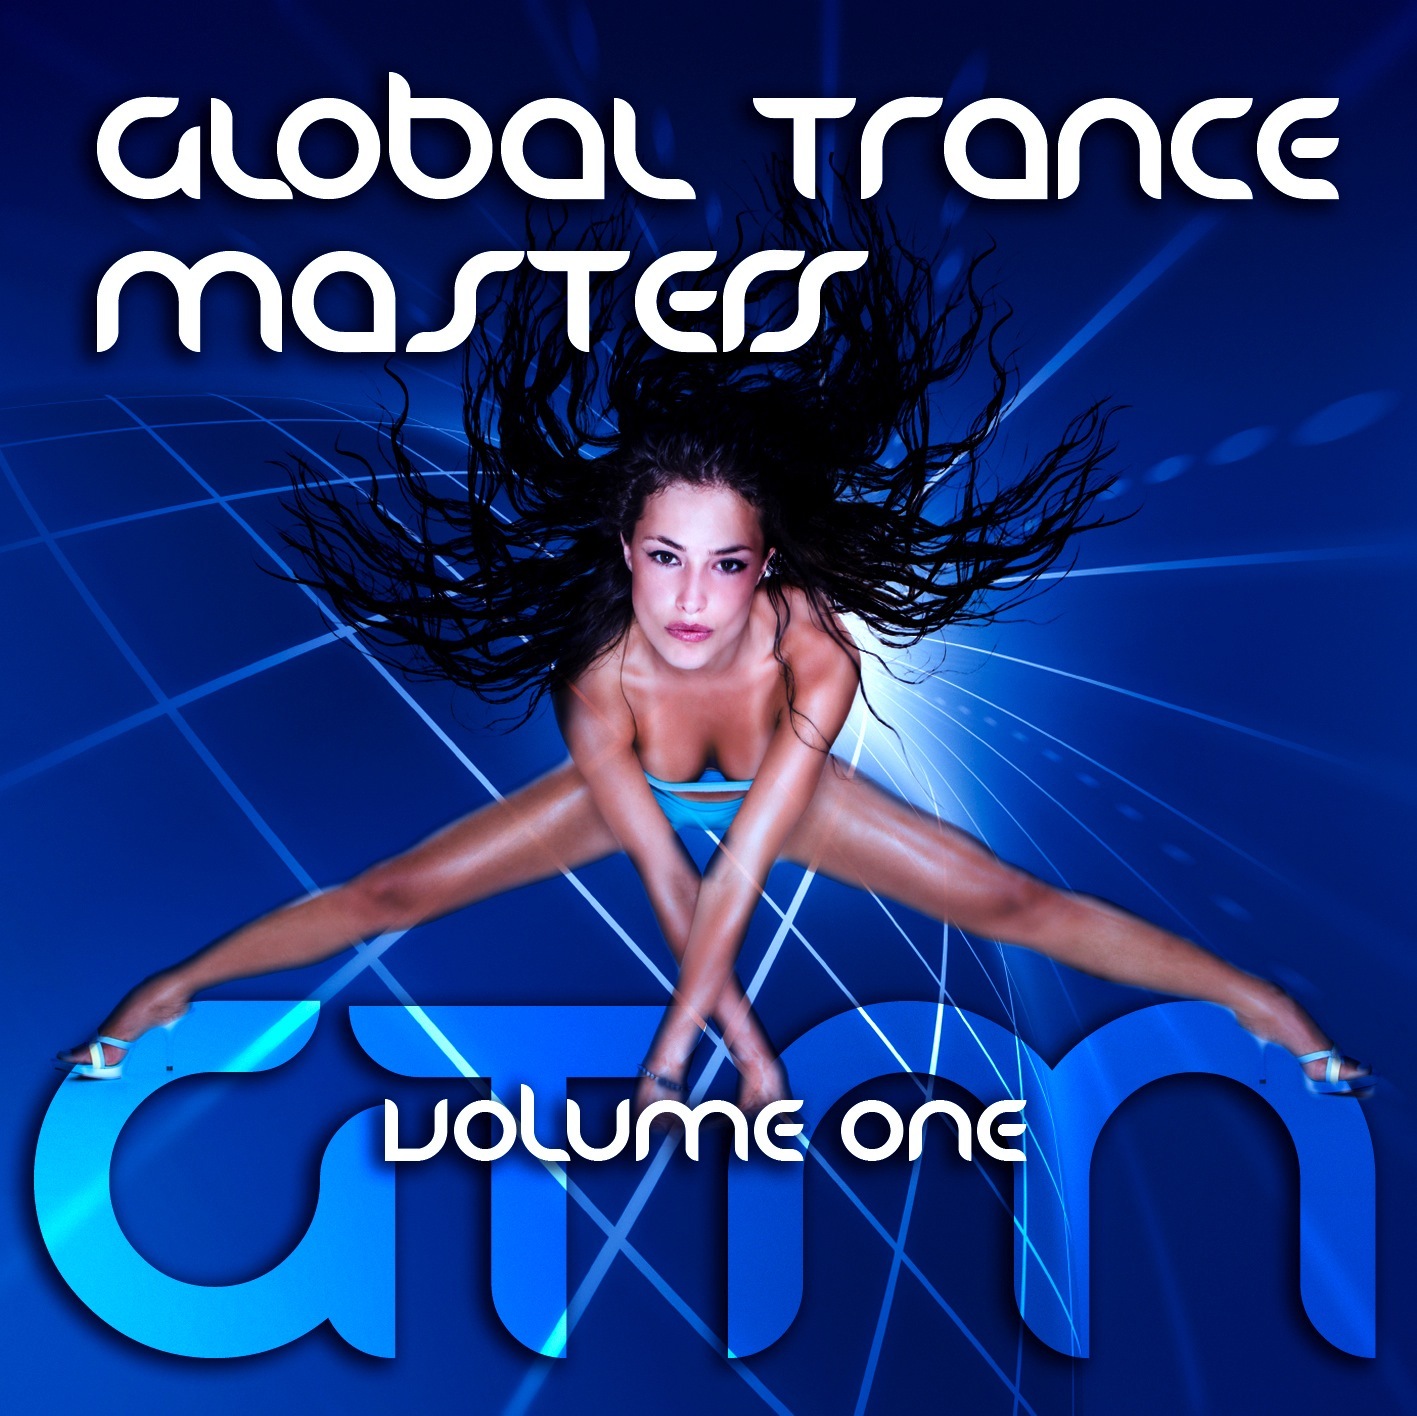 Global Trance Masters Vol. 1